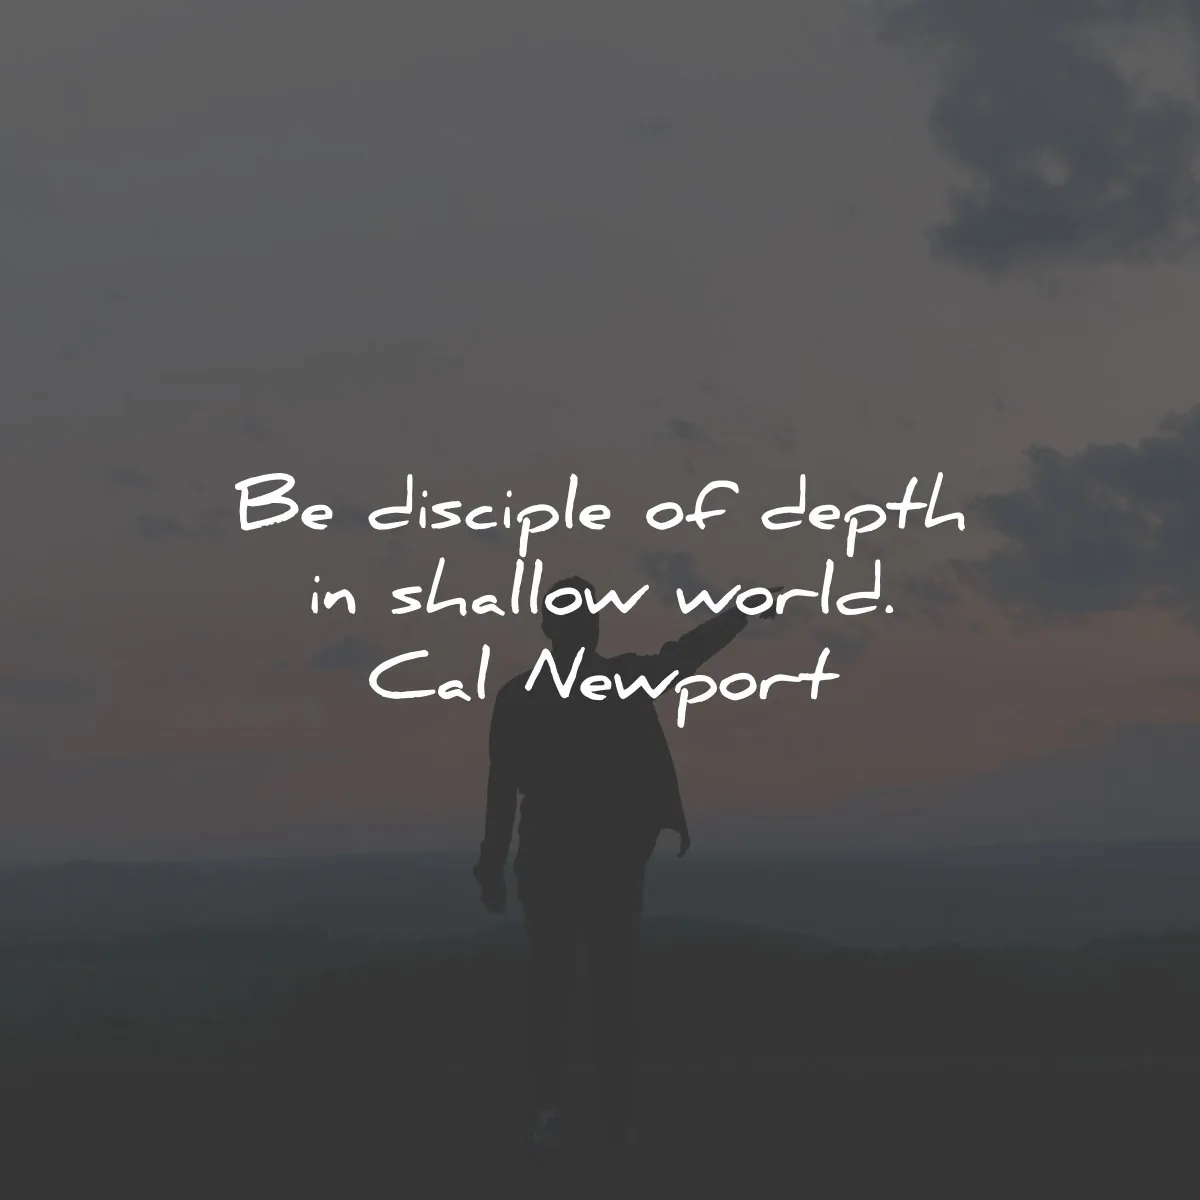 cal newport quotes disciple depth shallow world wisdom